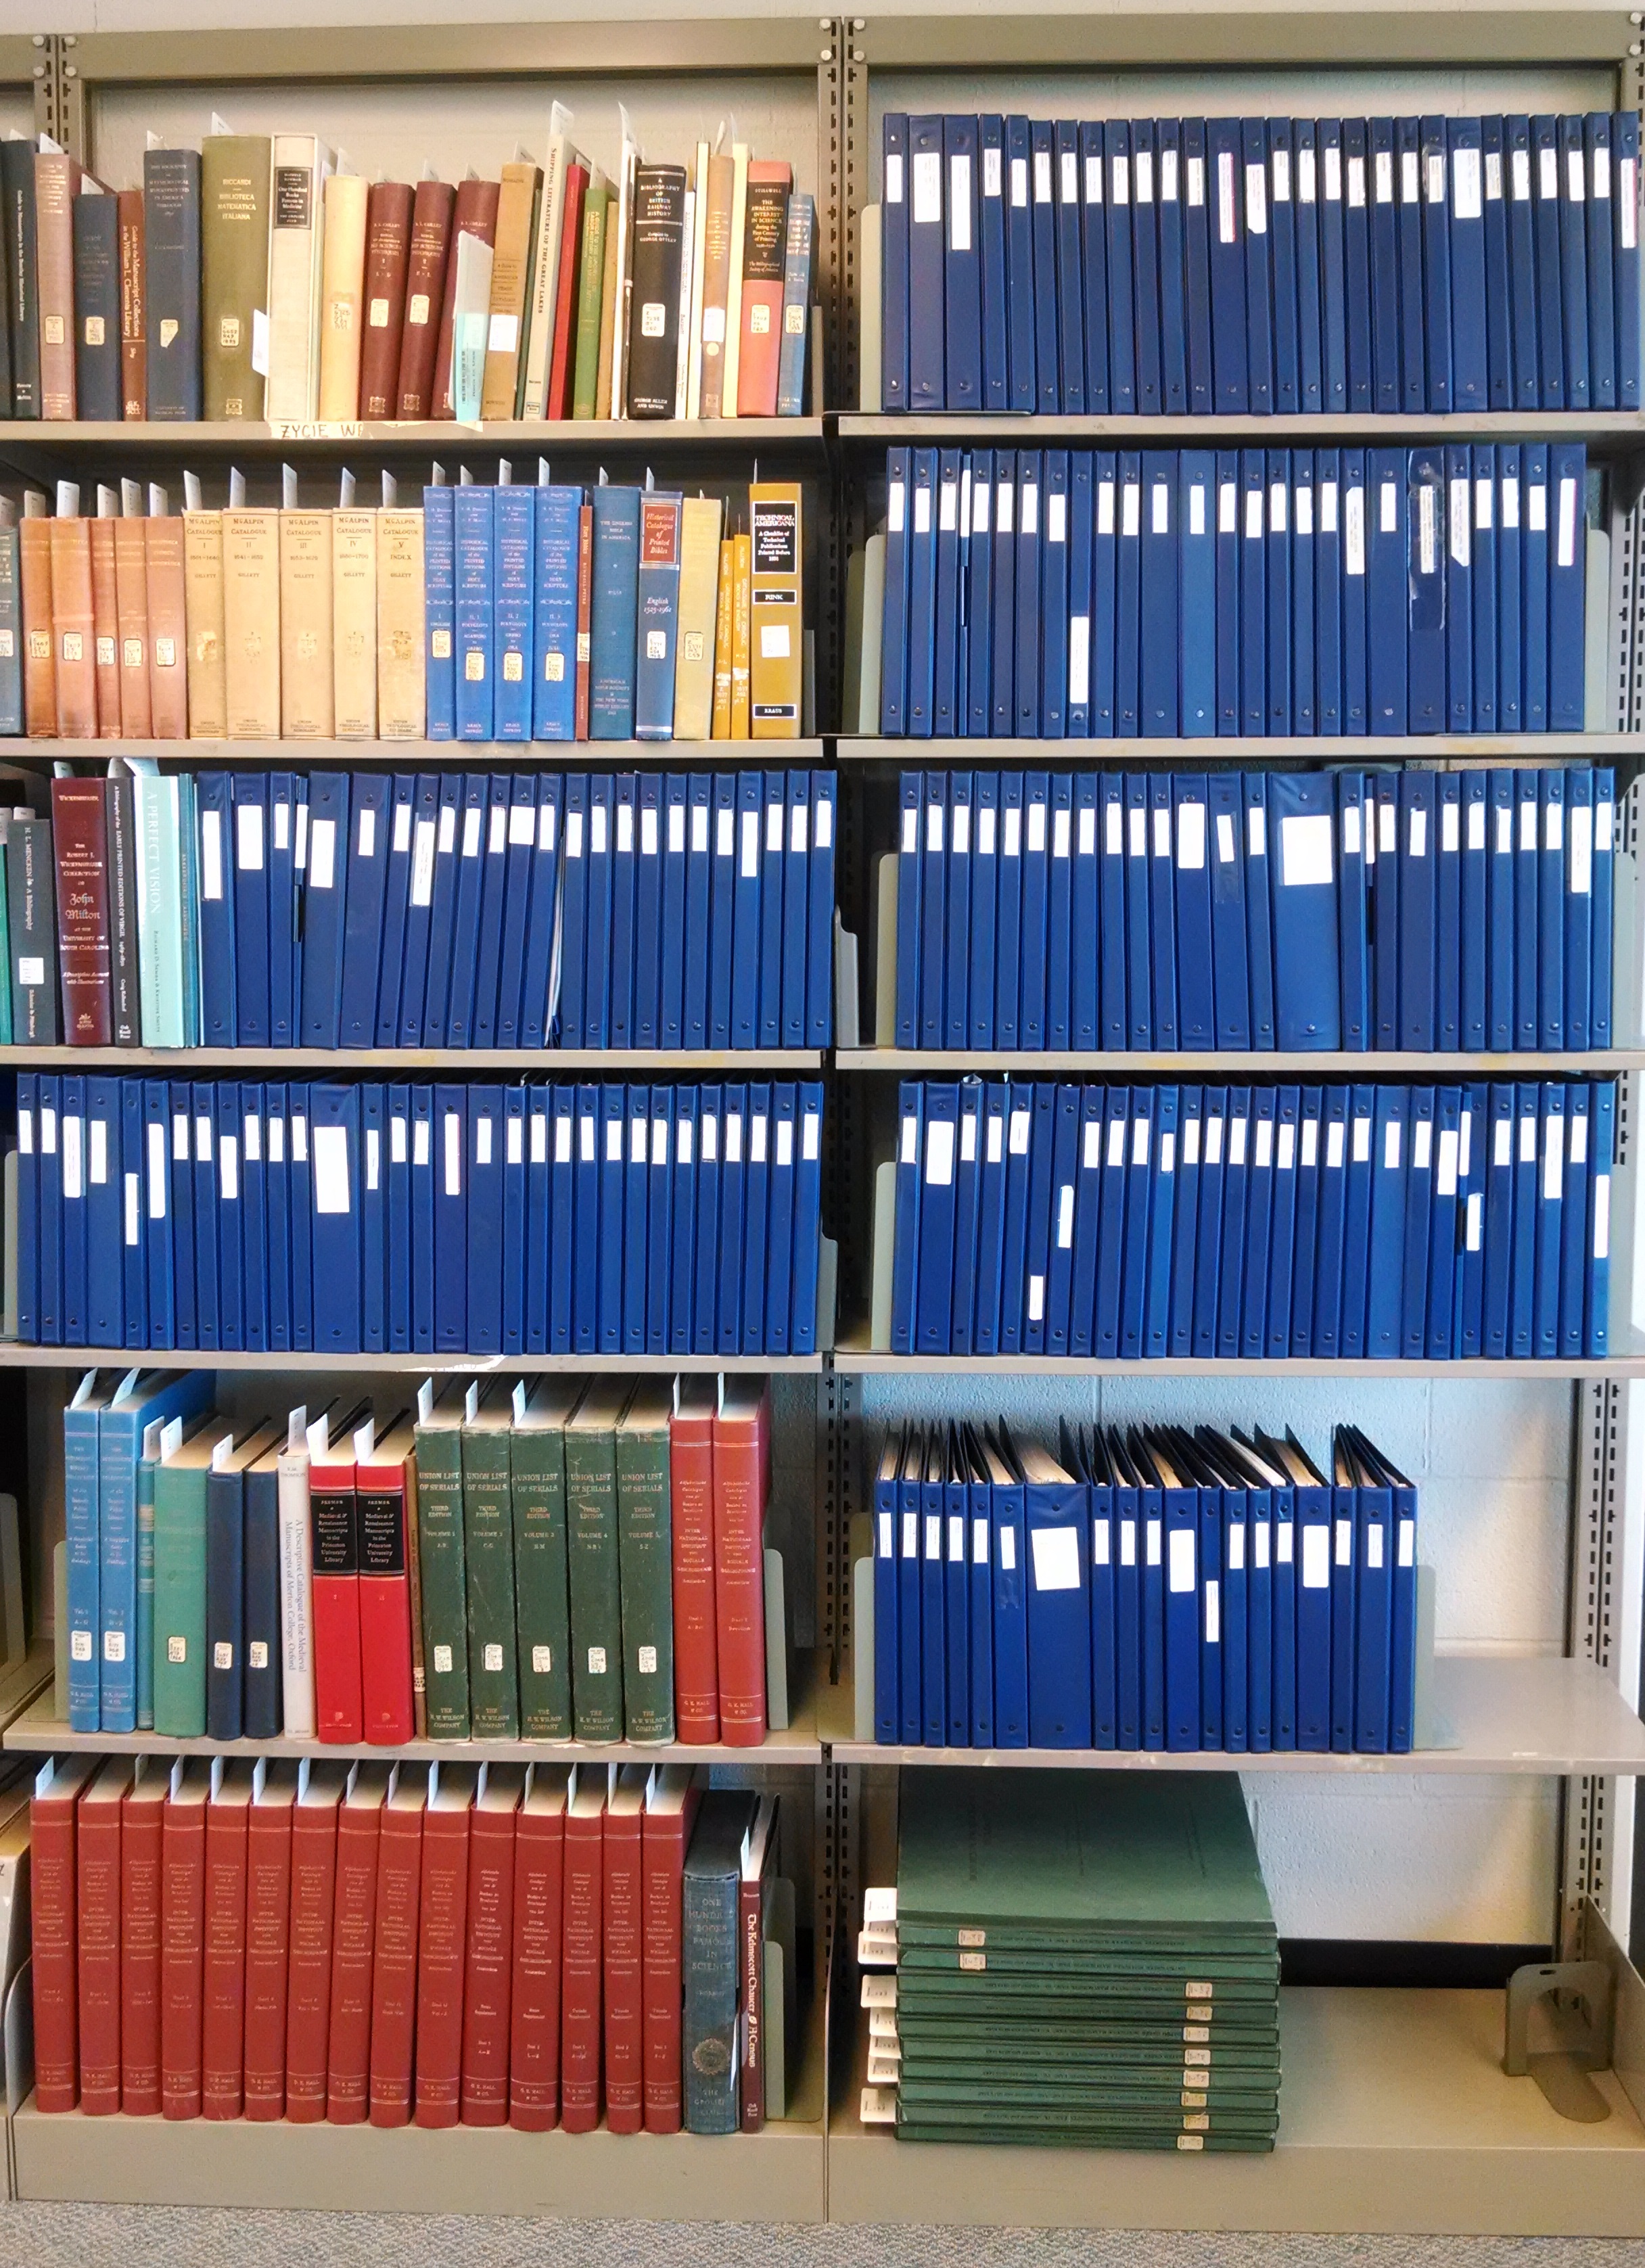 Blue binders on shelves in Reading Room